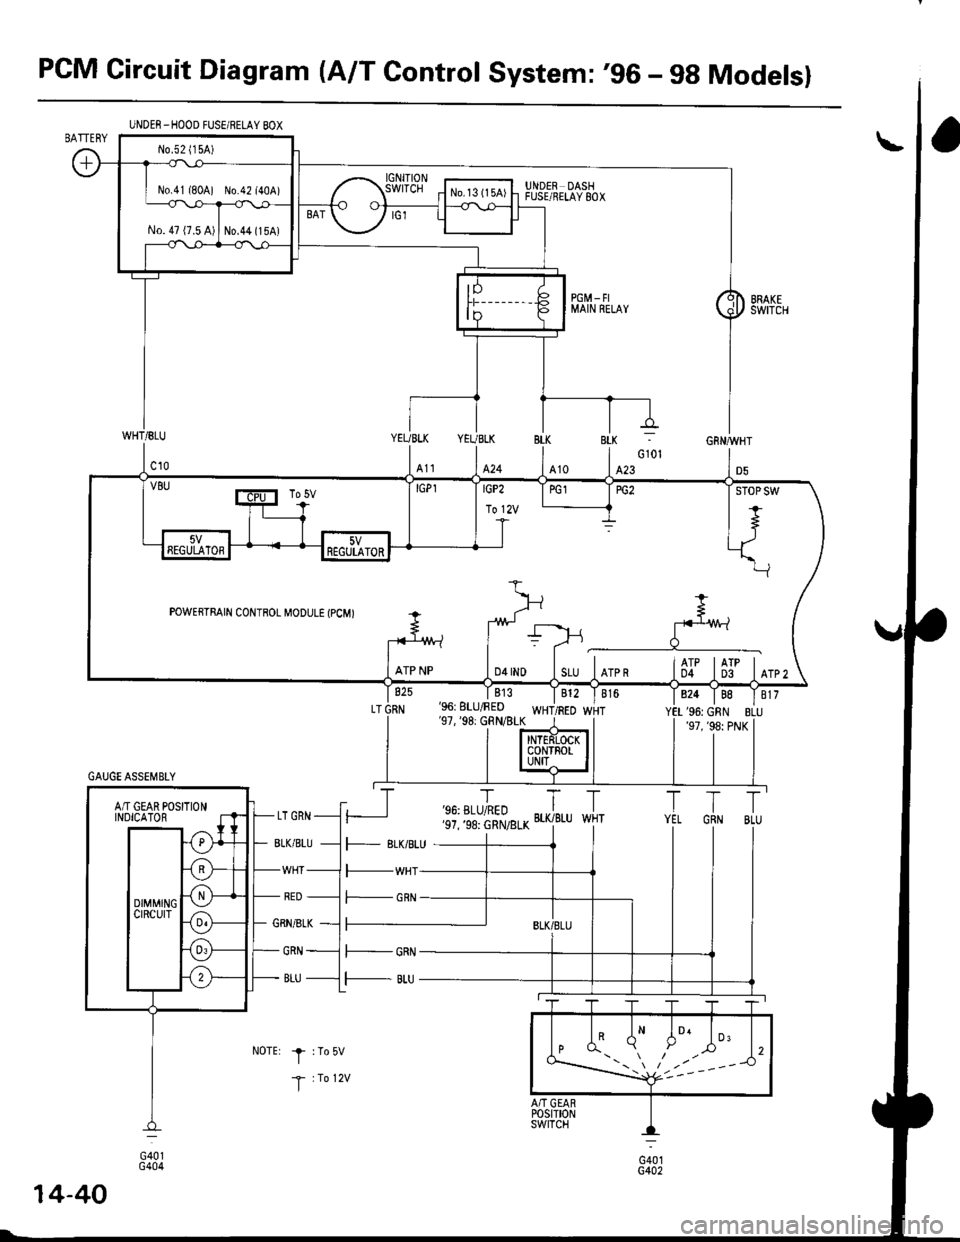 HONDA CIVIC 1997 6.G Workshop Manual PGM Gircuit Diagram (A/T Control System: 96 - 98 Modelsl
UNDEfl -HOOD FUSE/RELAY BOX
No.41 (80A1 N0.42 l40A)
No.47 {7.5 A)
No.l3 (15A)
Arp Np lon,^o l r,, lotrr l 6lt l 3]t lot*
UNDER DASHFUSE/REIAY 